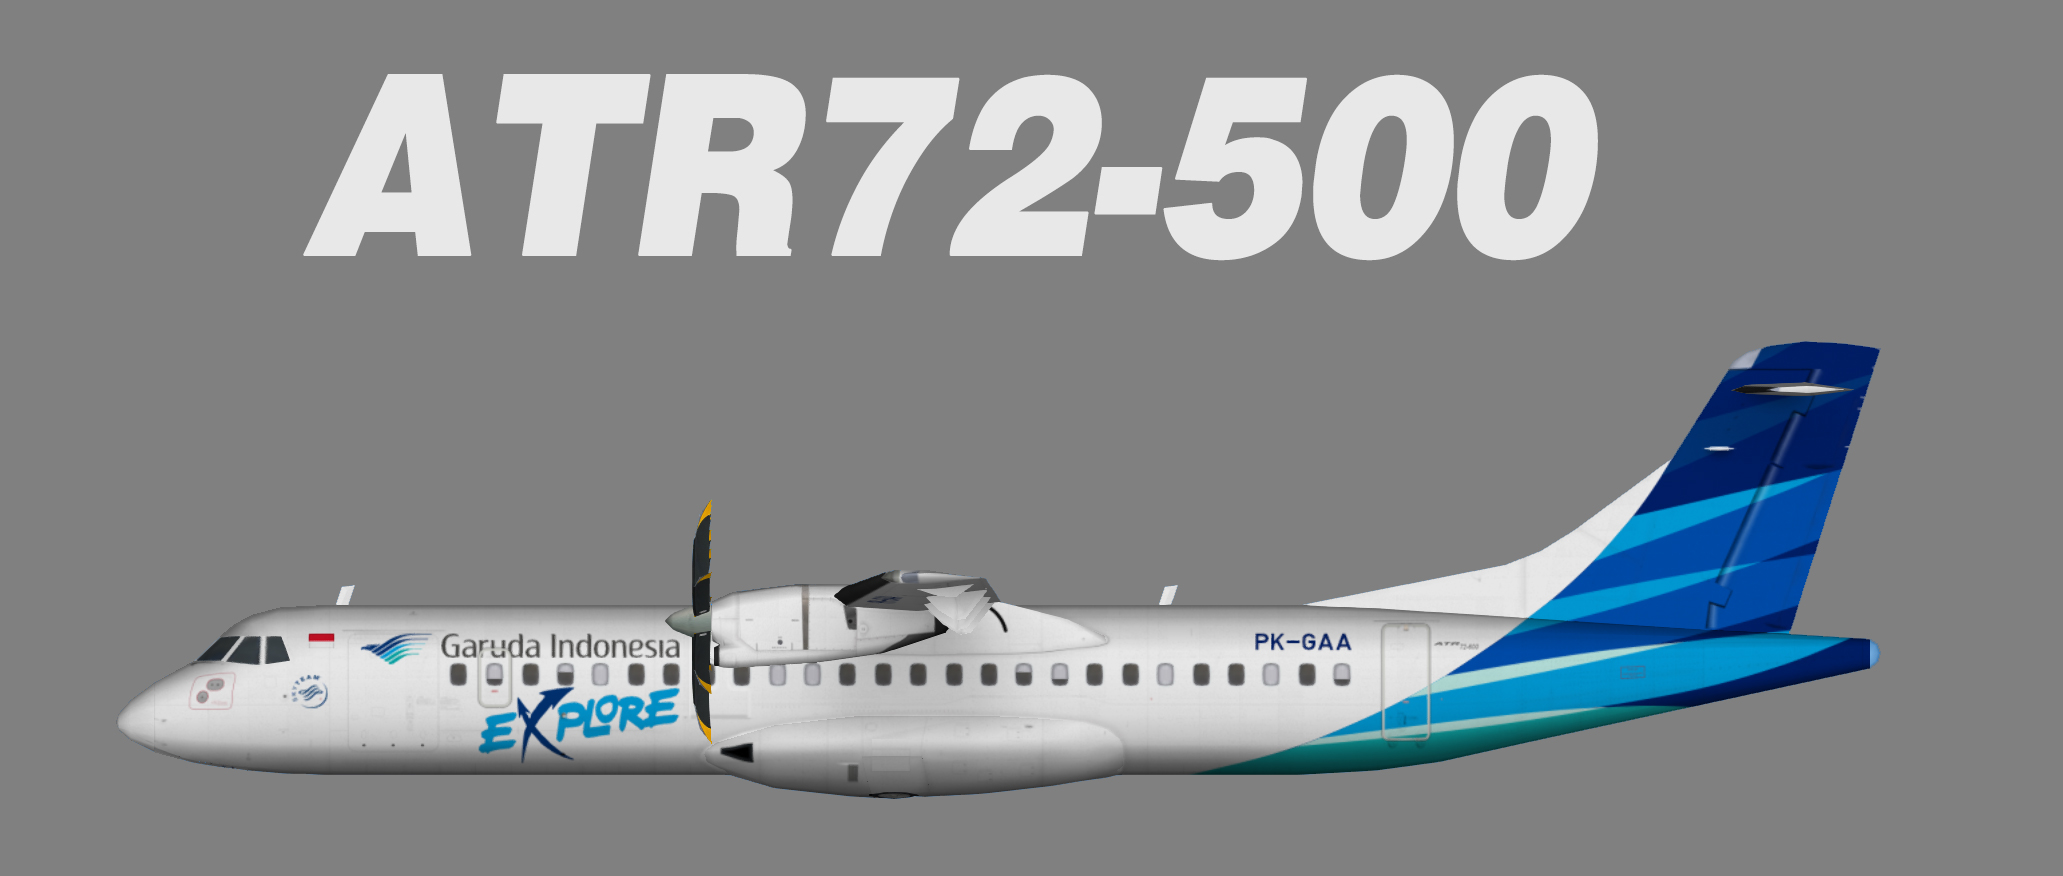 Garuda Indonesia Explore ATR 72-600